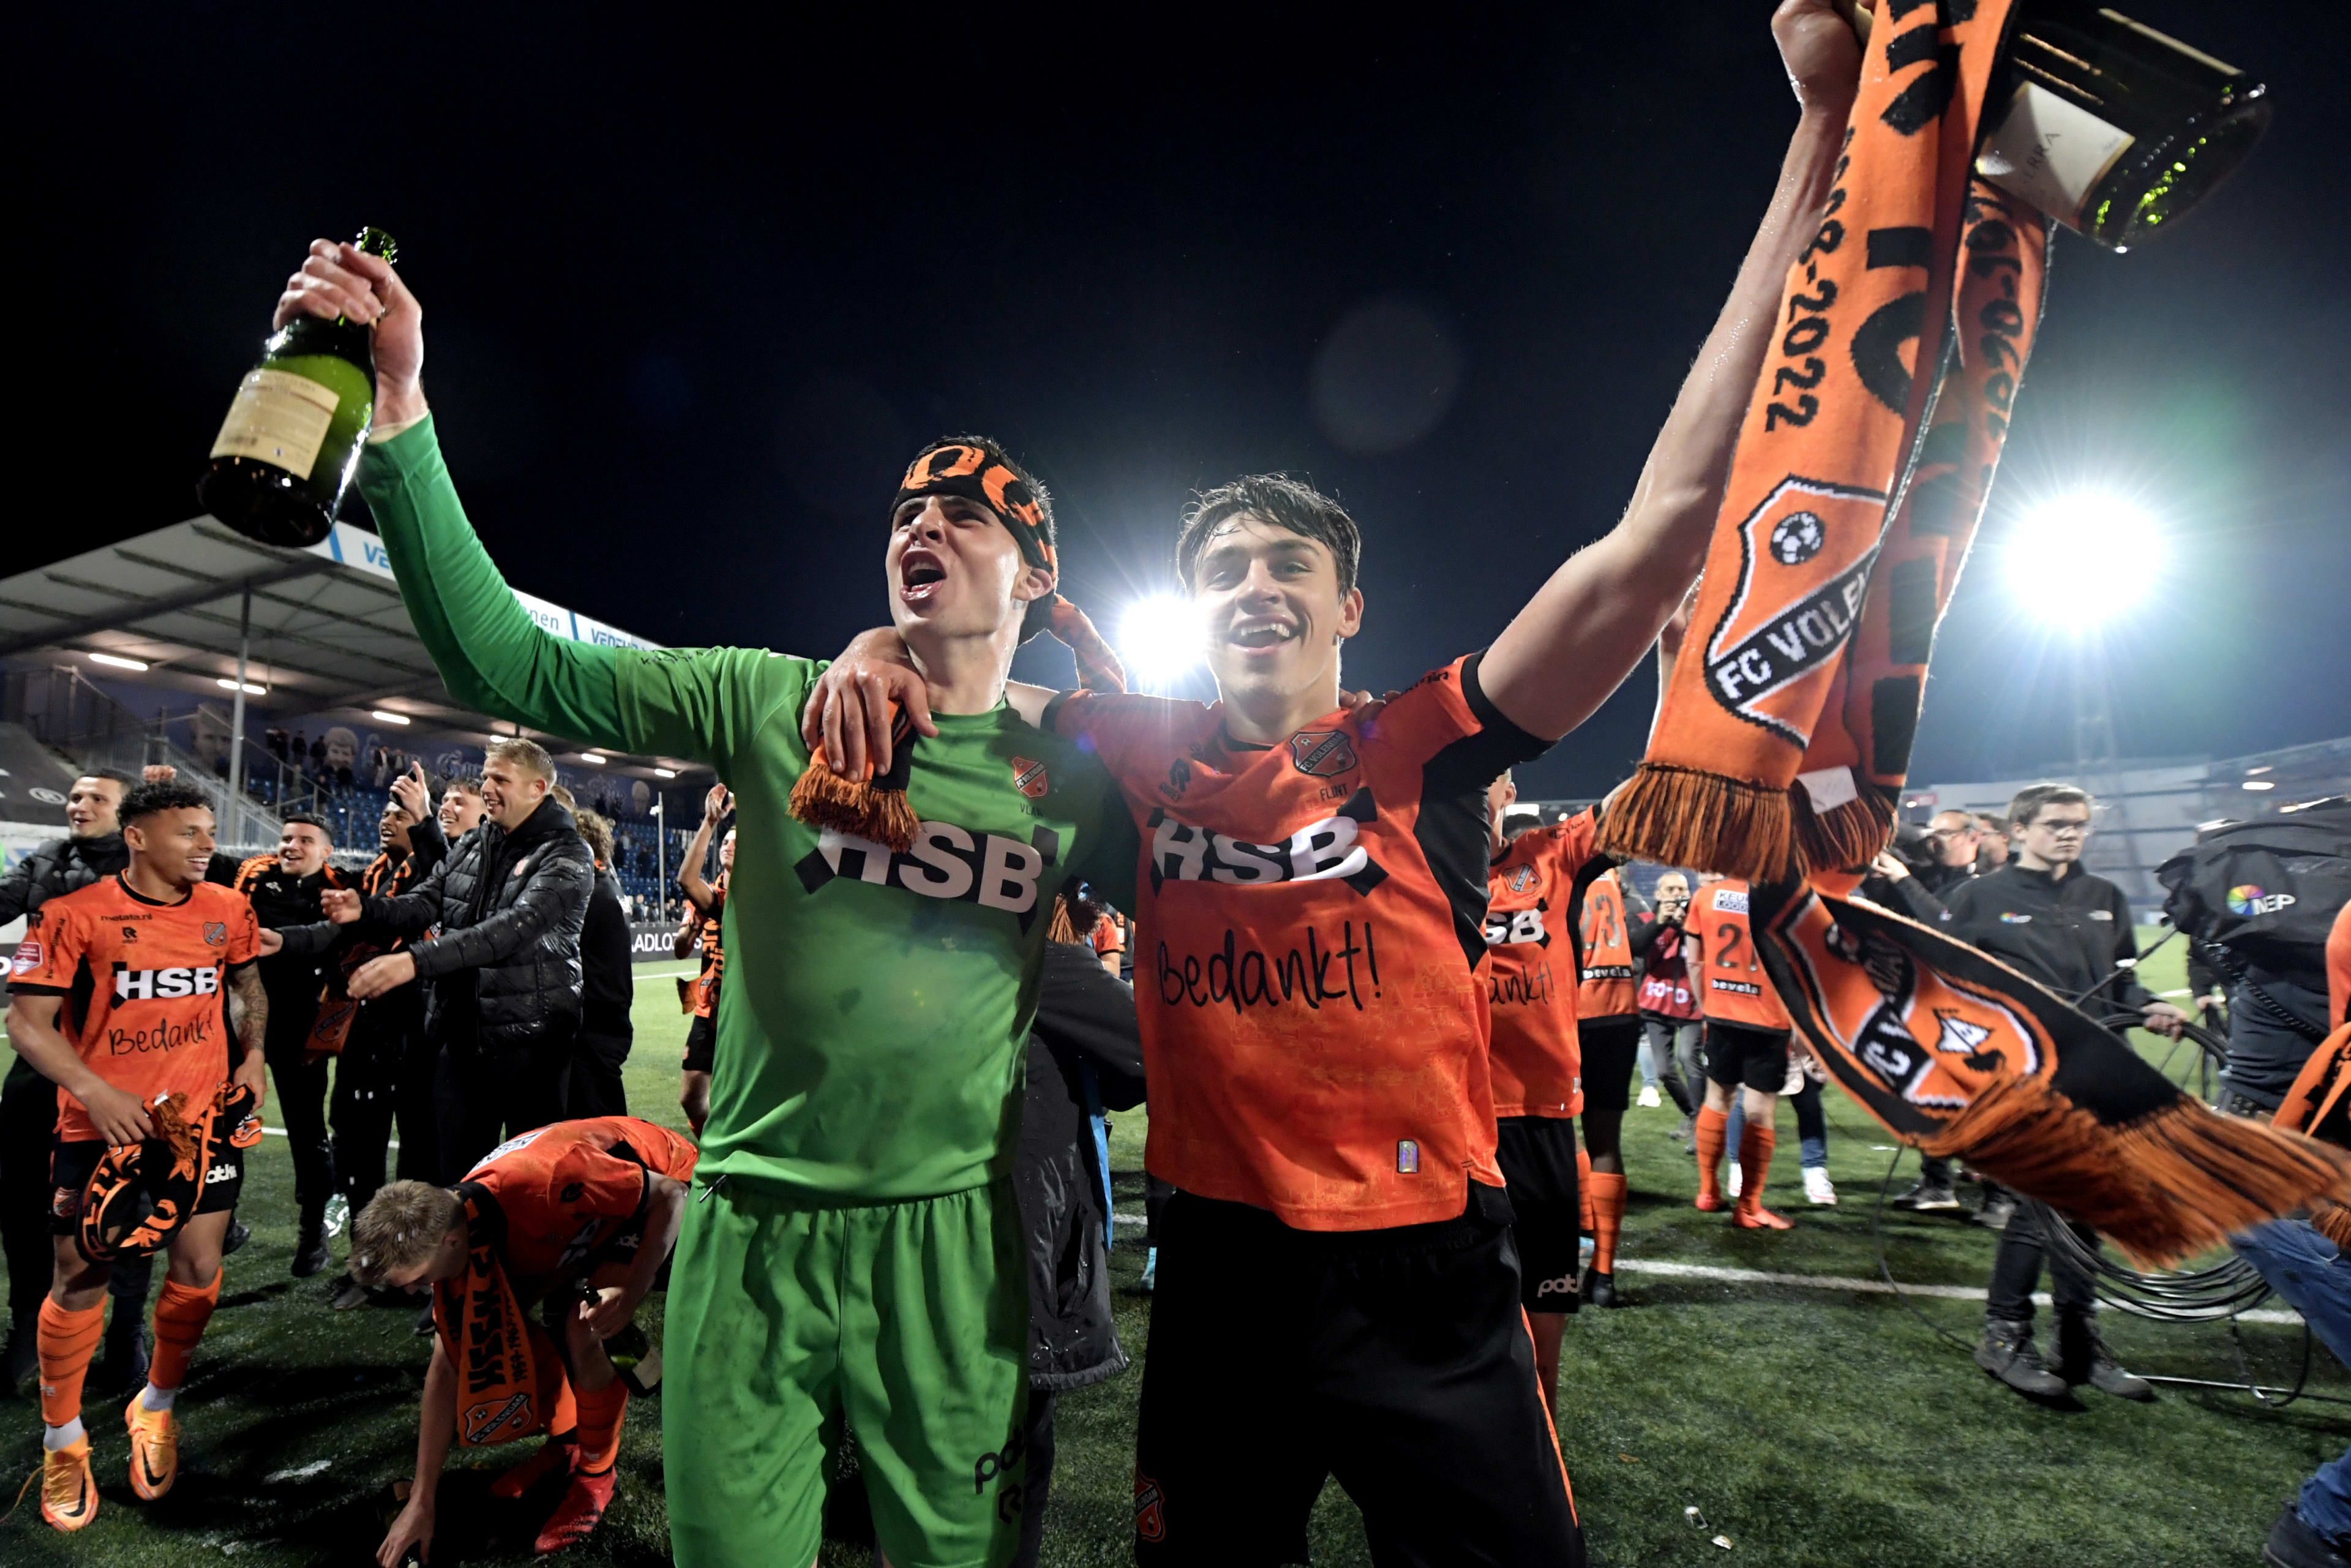 FC Volendam na dertien jaar terug in Eredivisie na knotsgekke match tegen FC Den Bosch